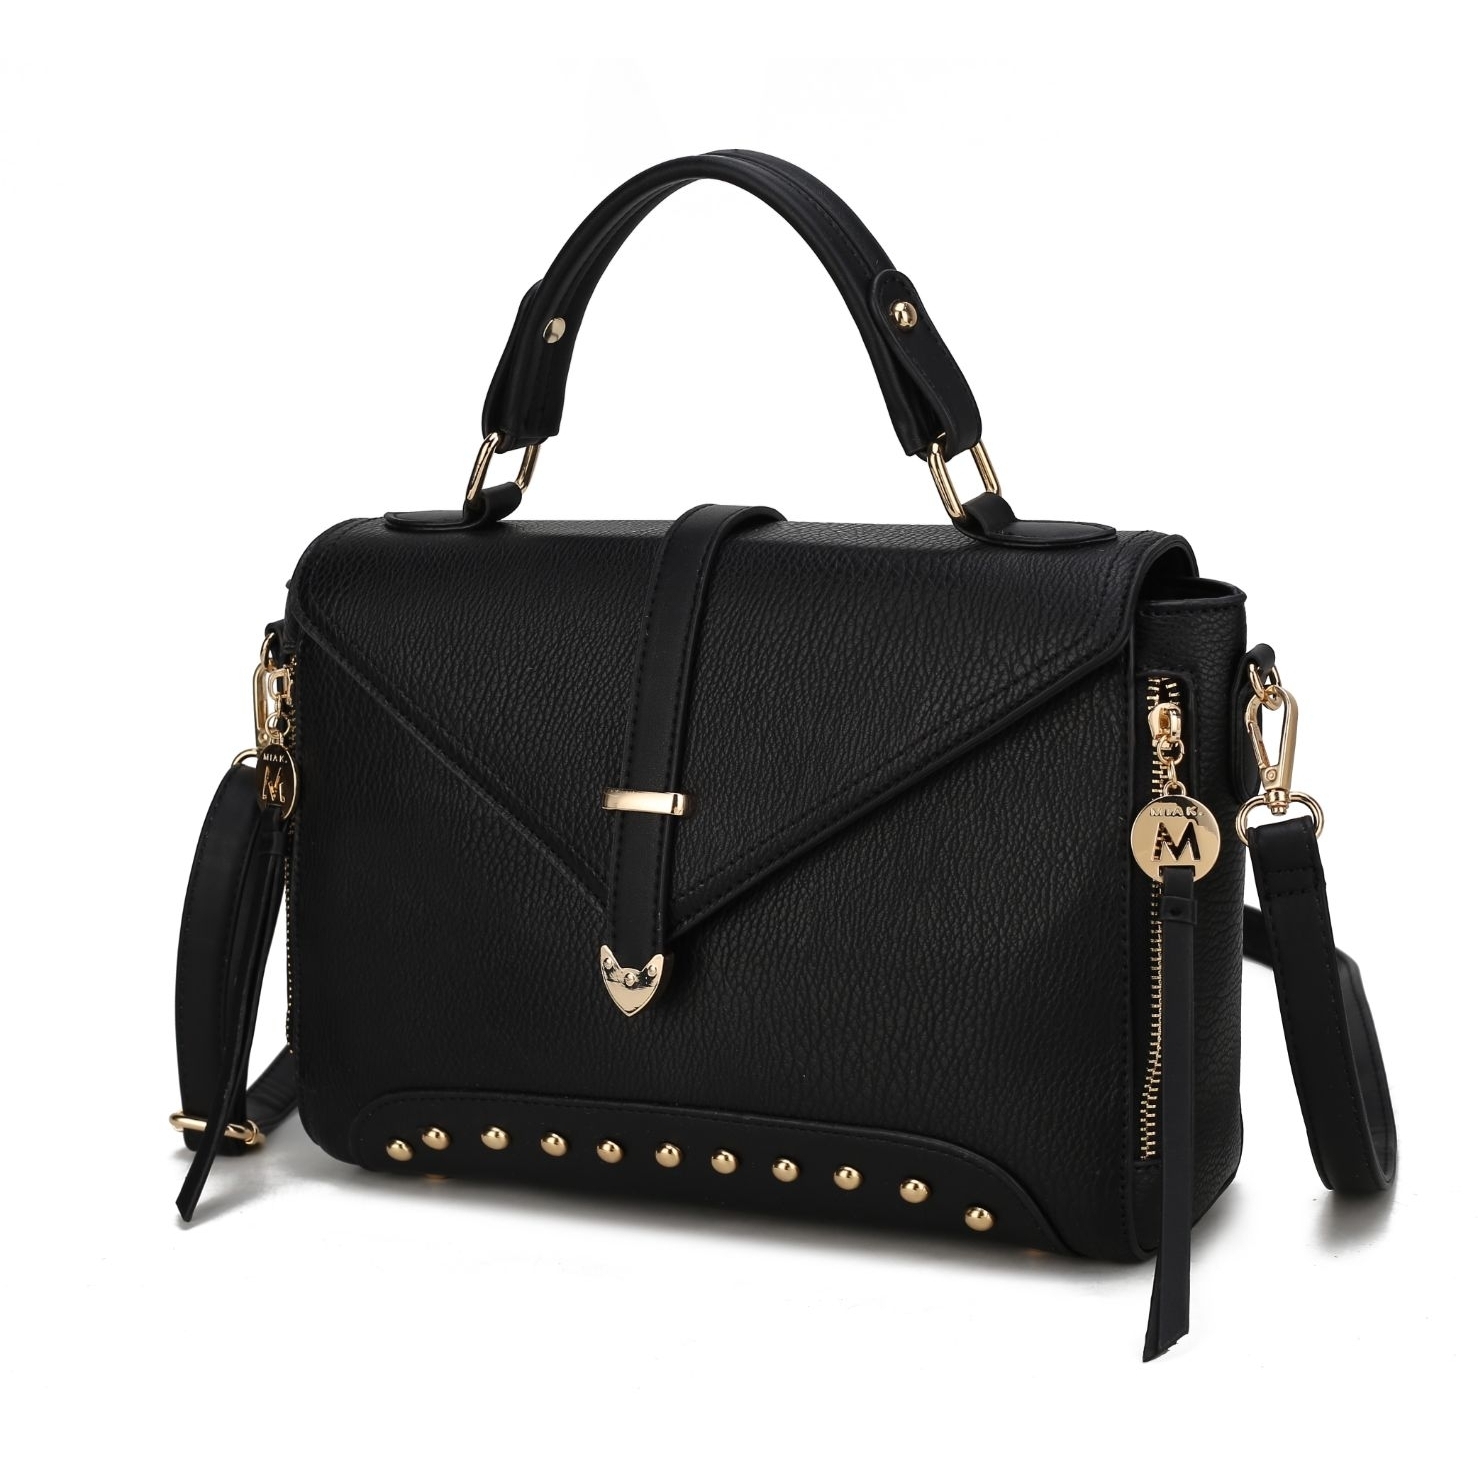 MKF Collection Angela Vegan Leather Women's Satchel Handbag By Mia K - Yellow